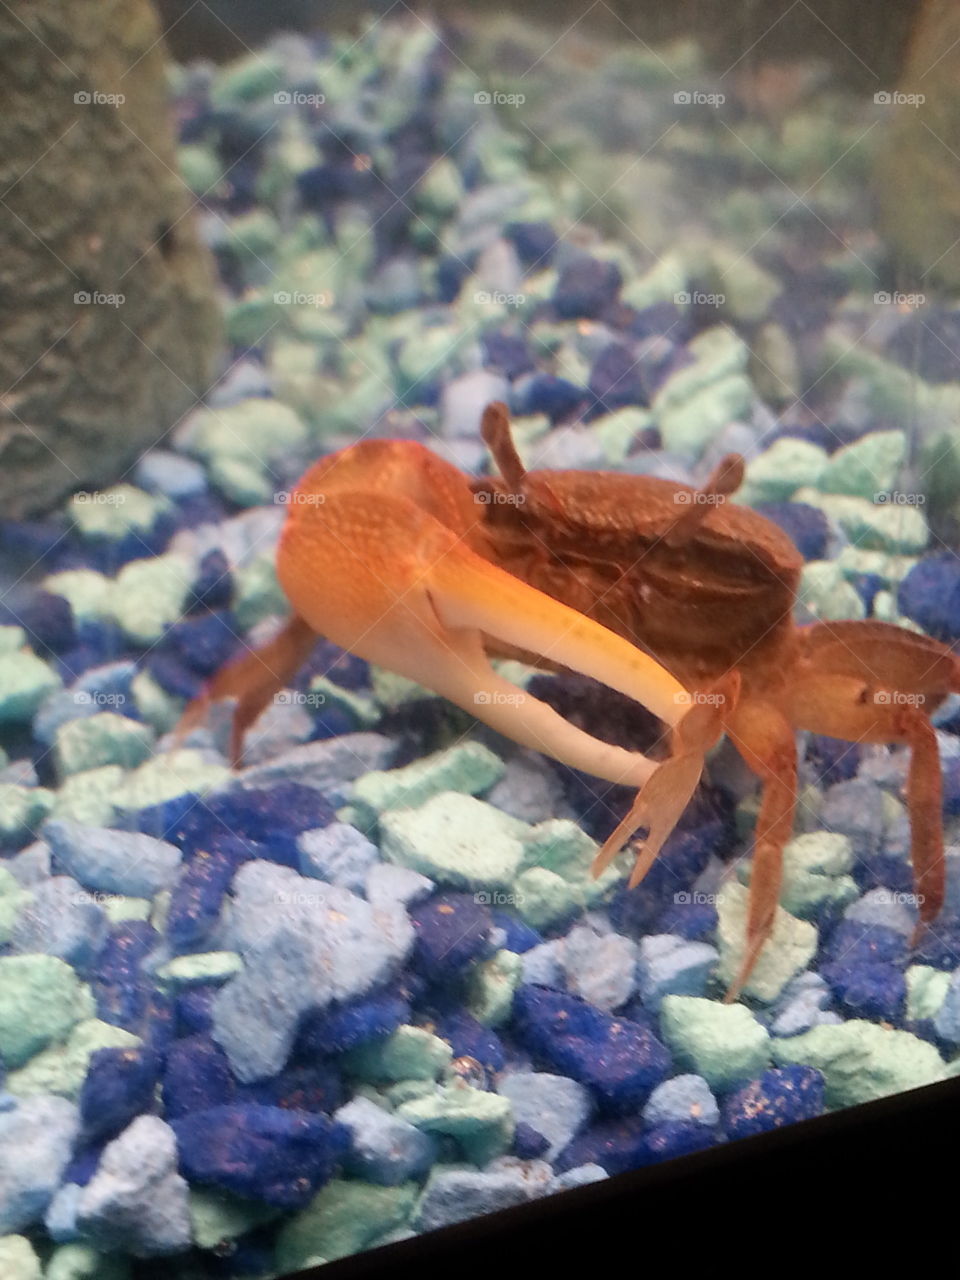 Mr. Crabs. A little crab I had as a pet.